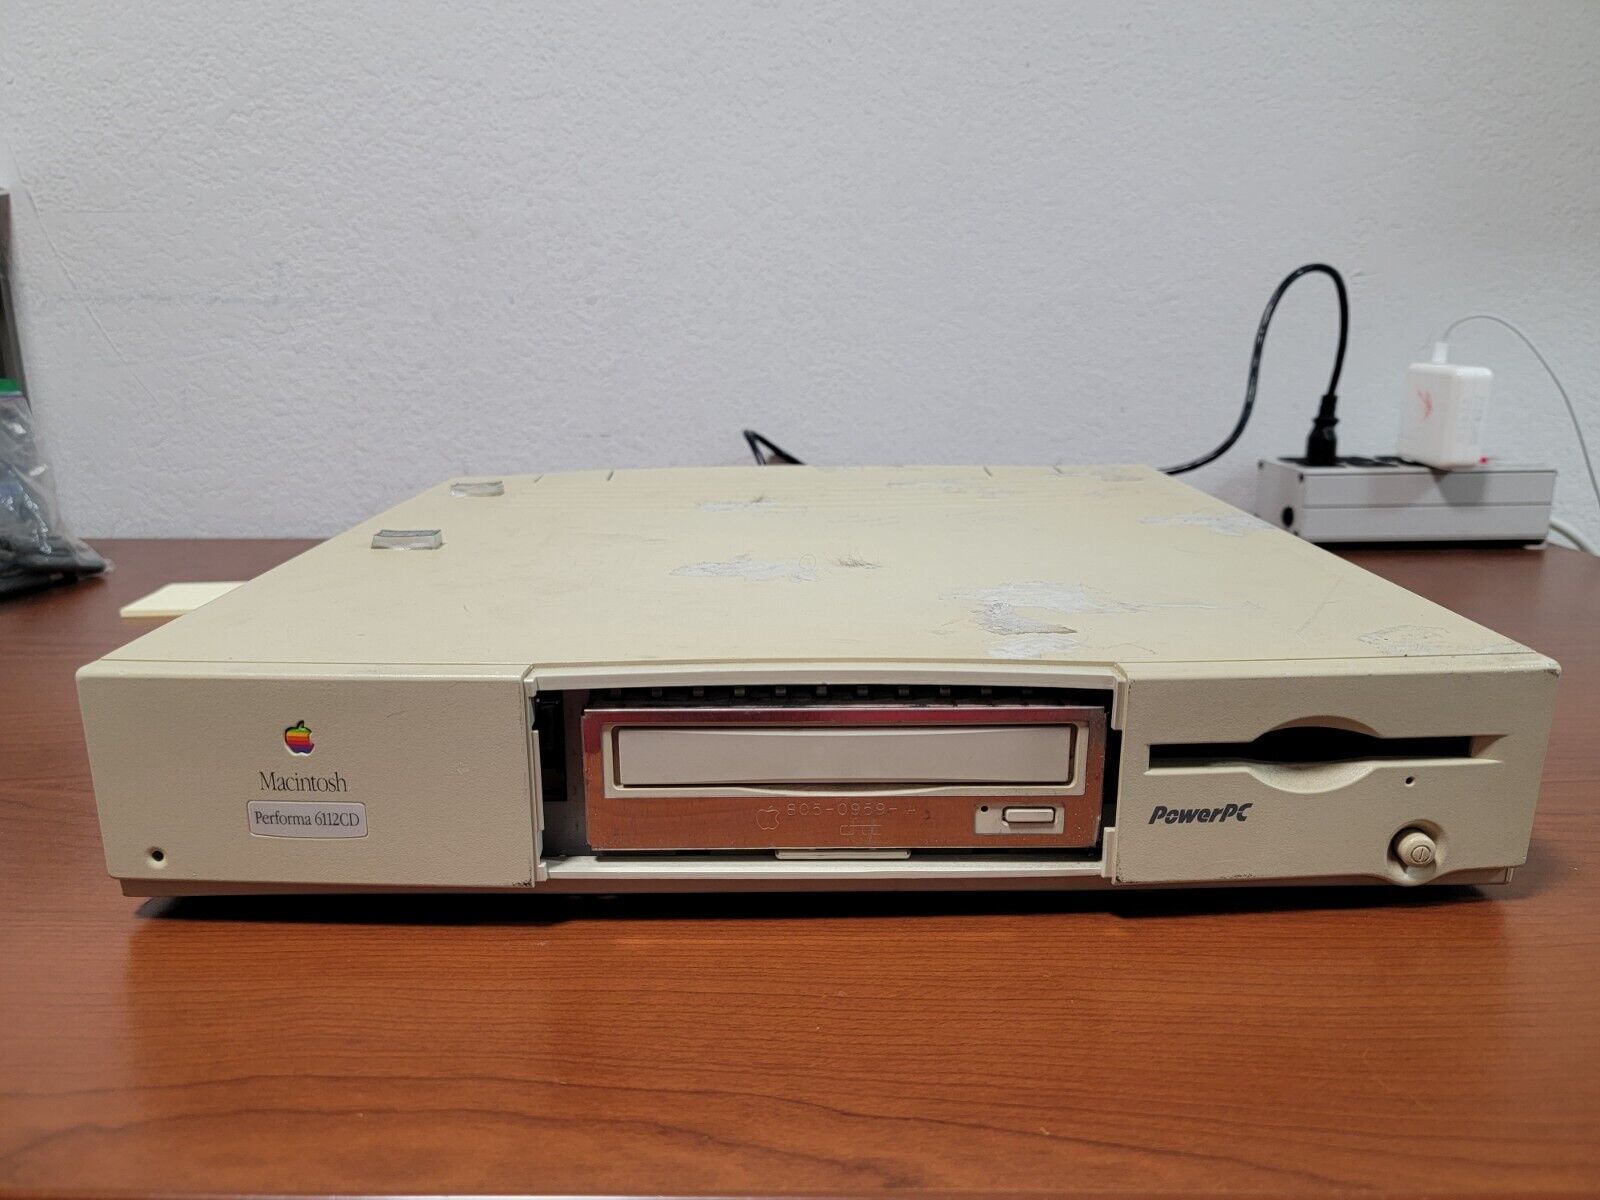 VINTAGE APPLE Macintosh Performa 6112CD Power PC - TURNS ON, CHIMES, UNTESTED